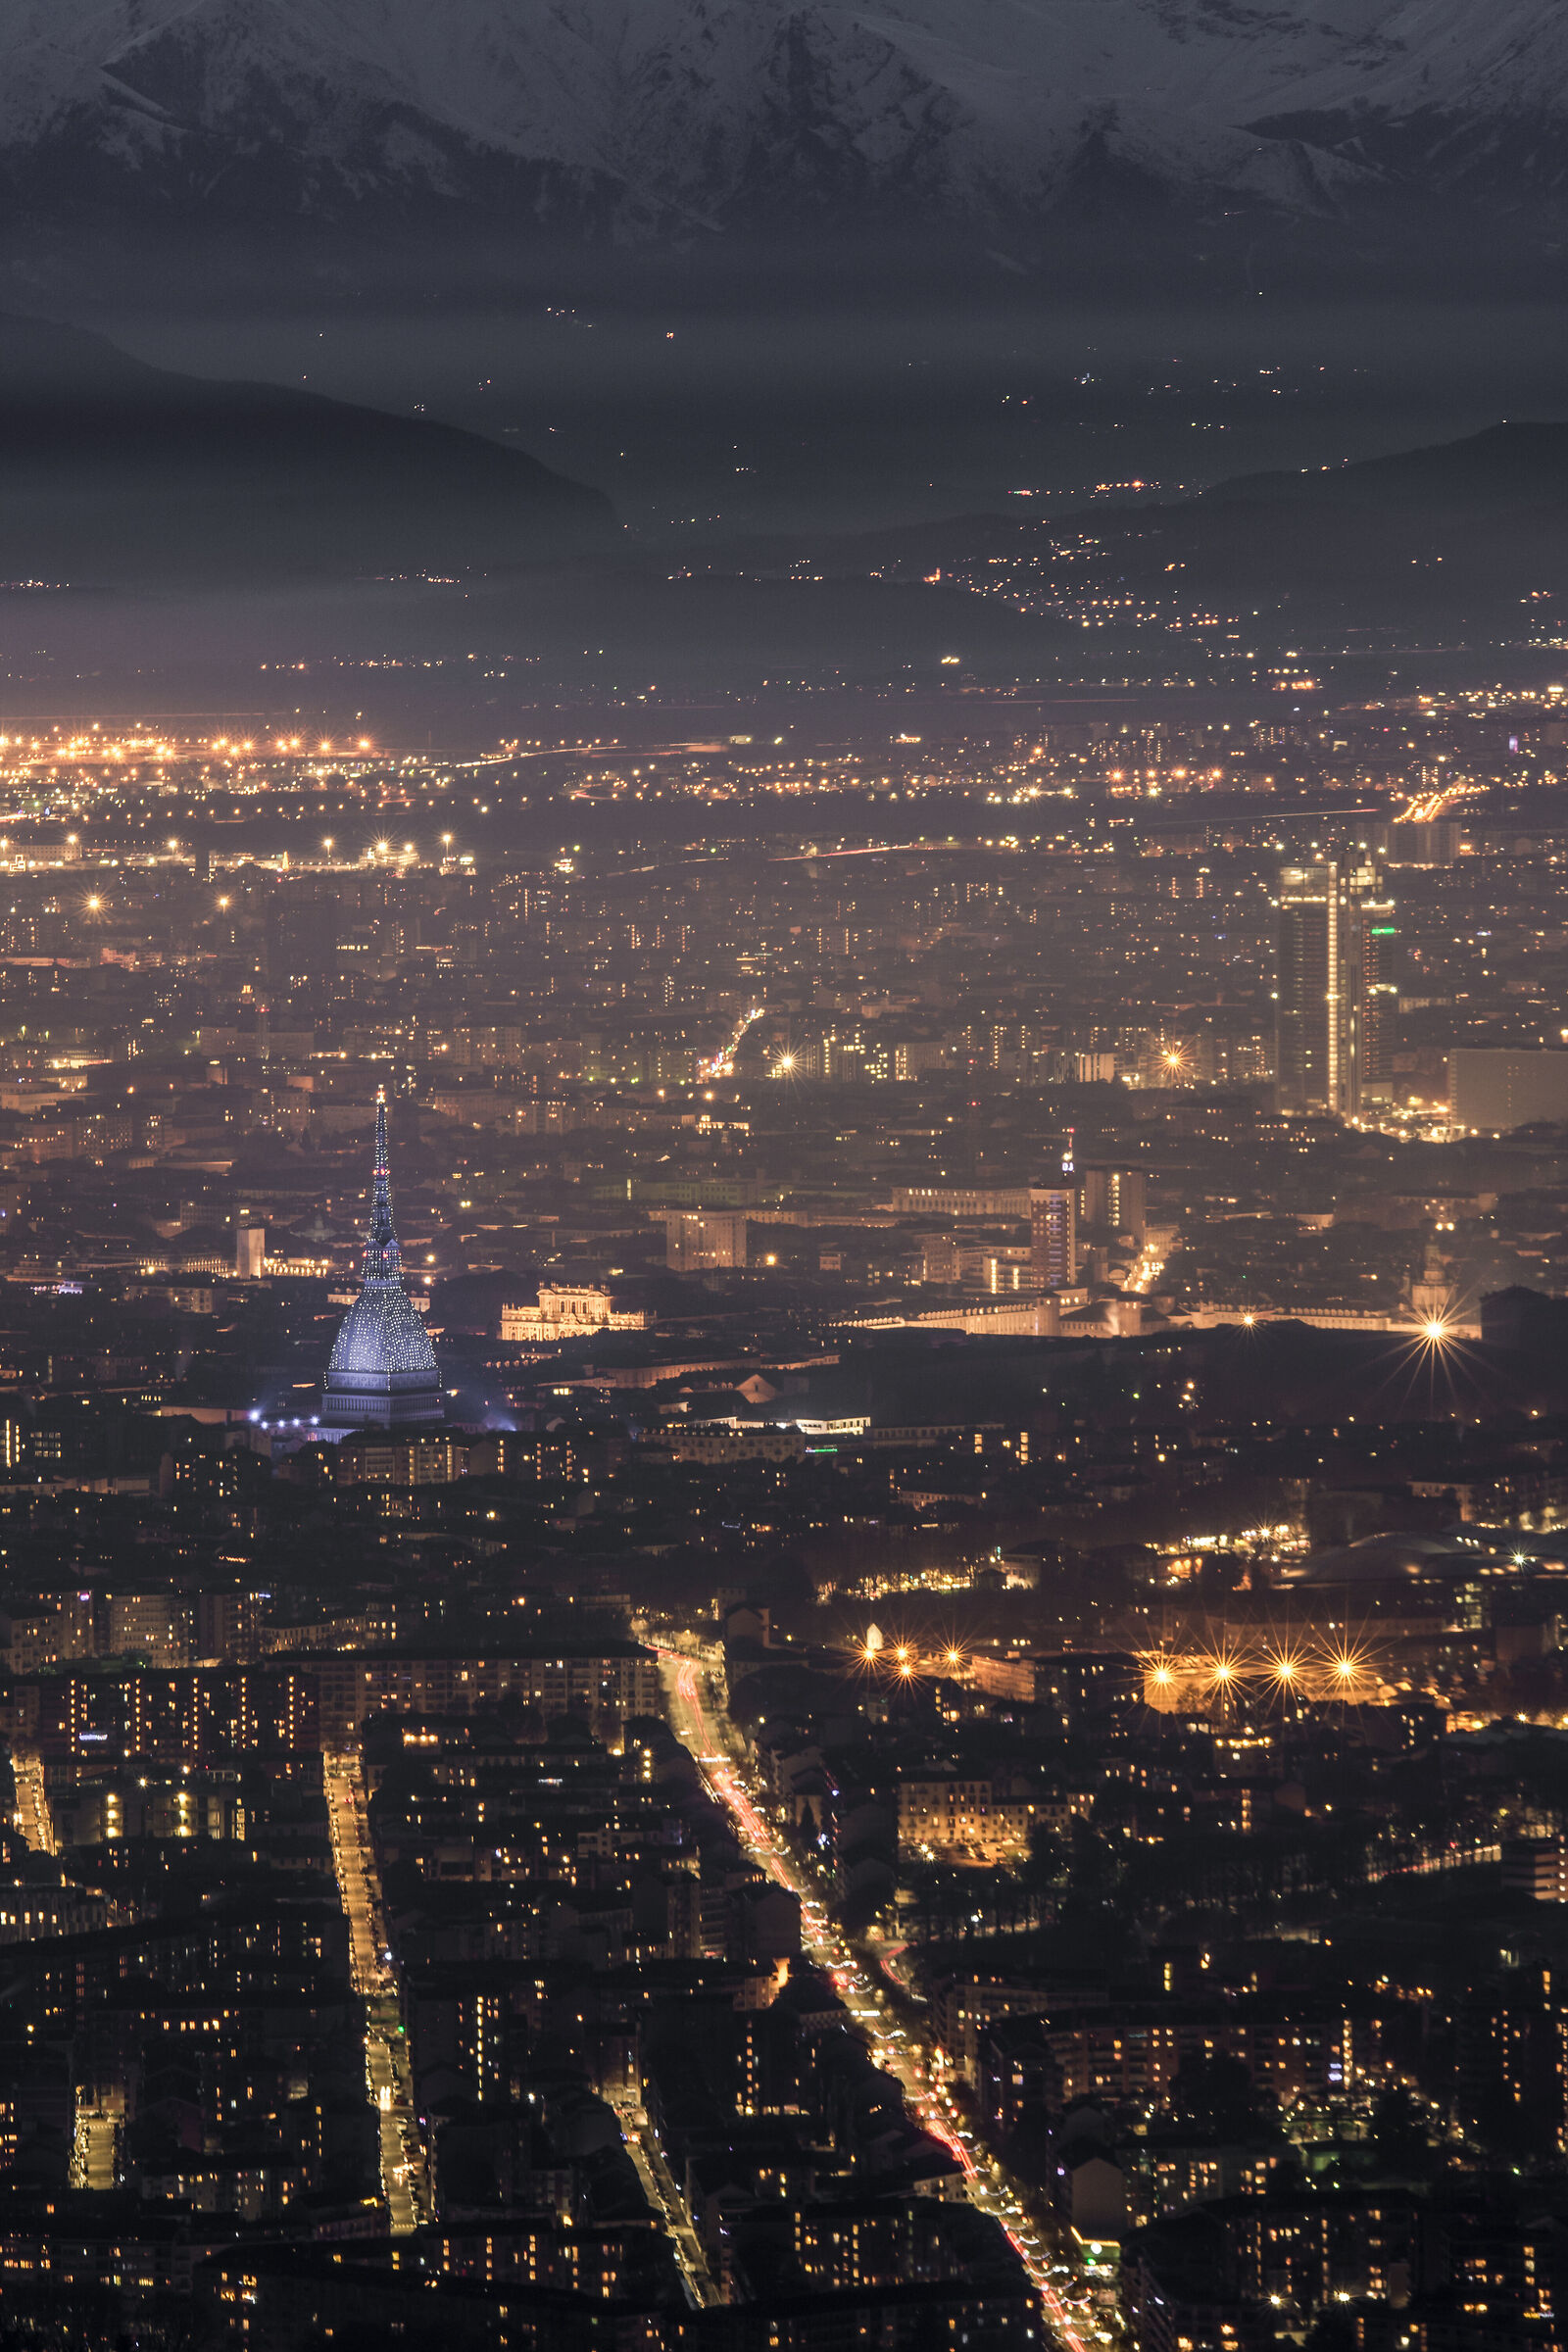 Turin at night...